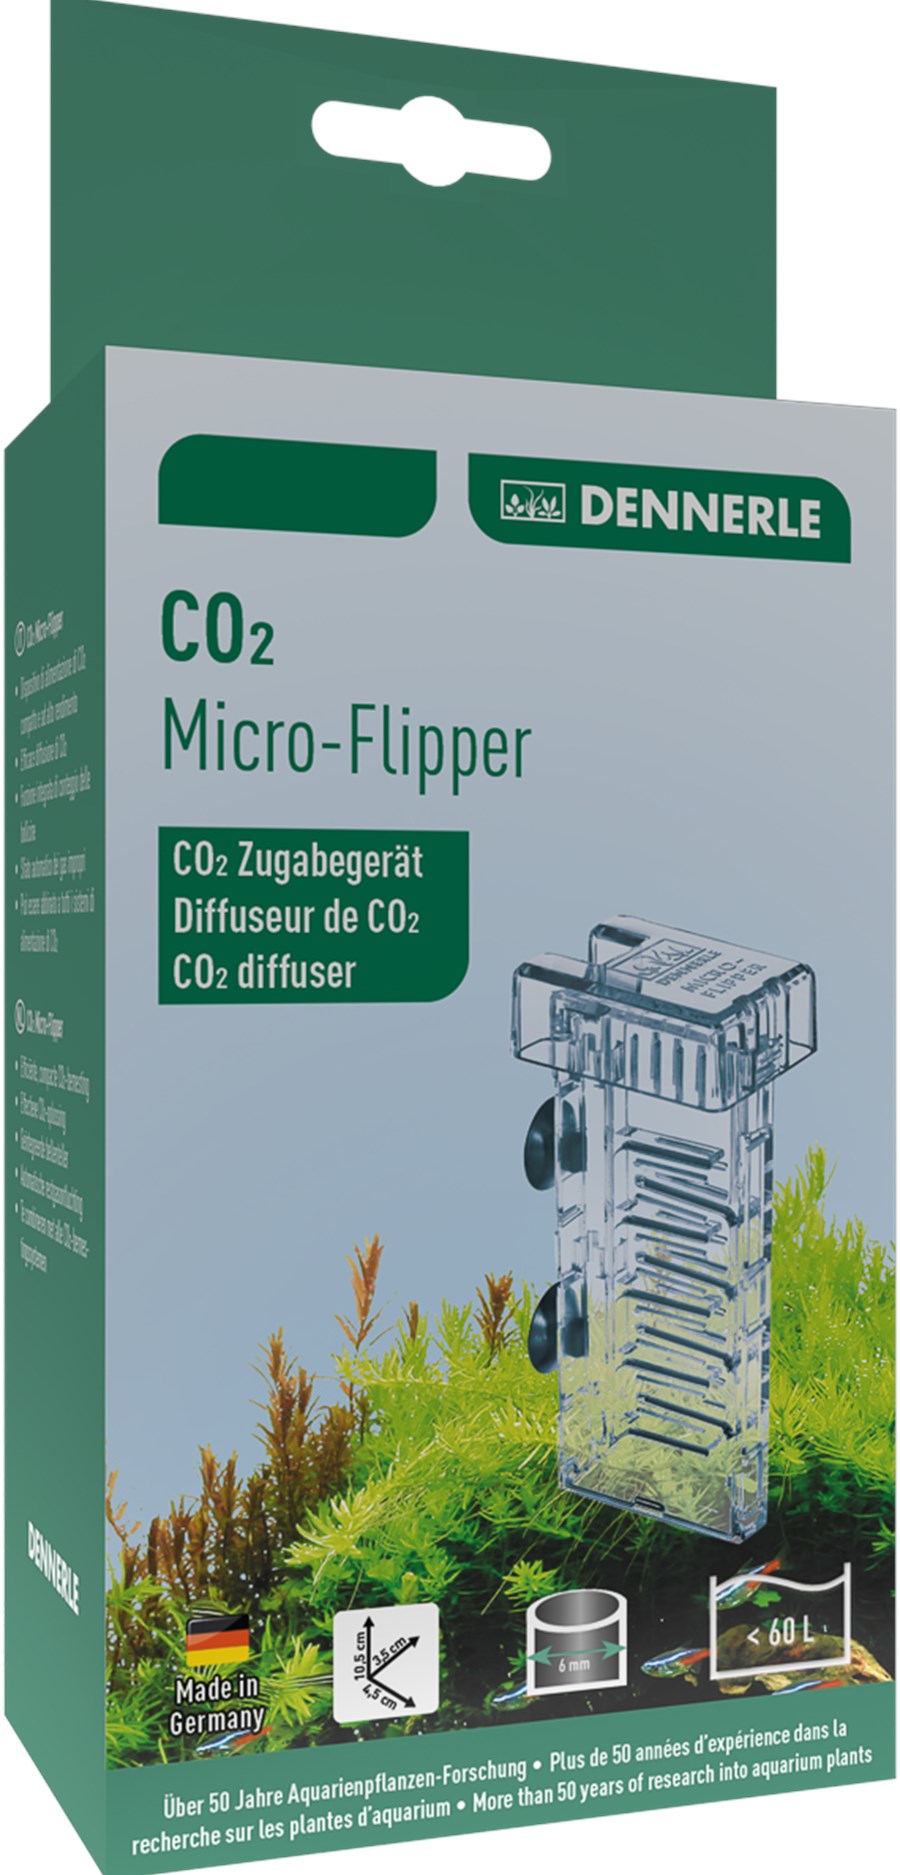 CO2 Micro Flipper 60l Dennerle